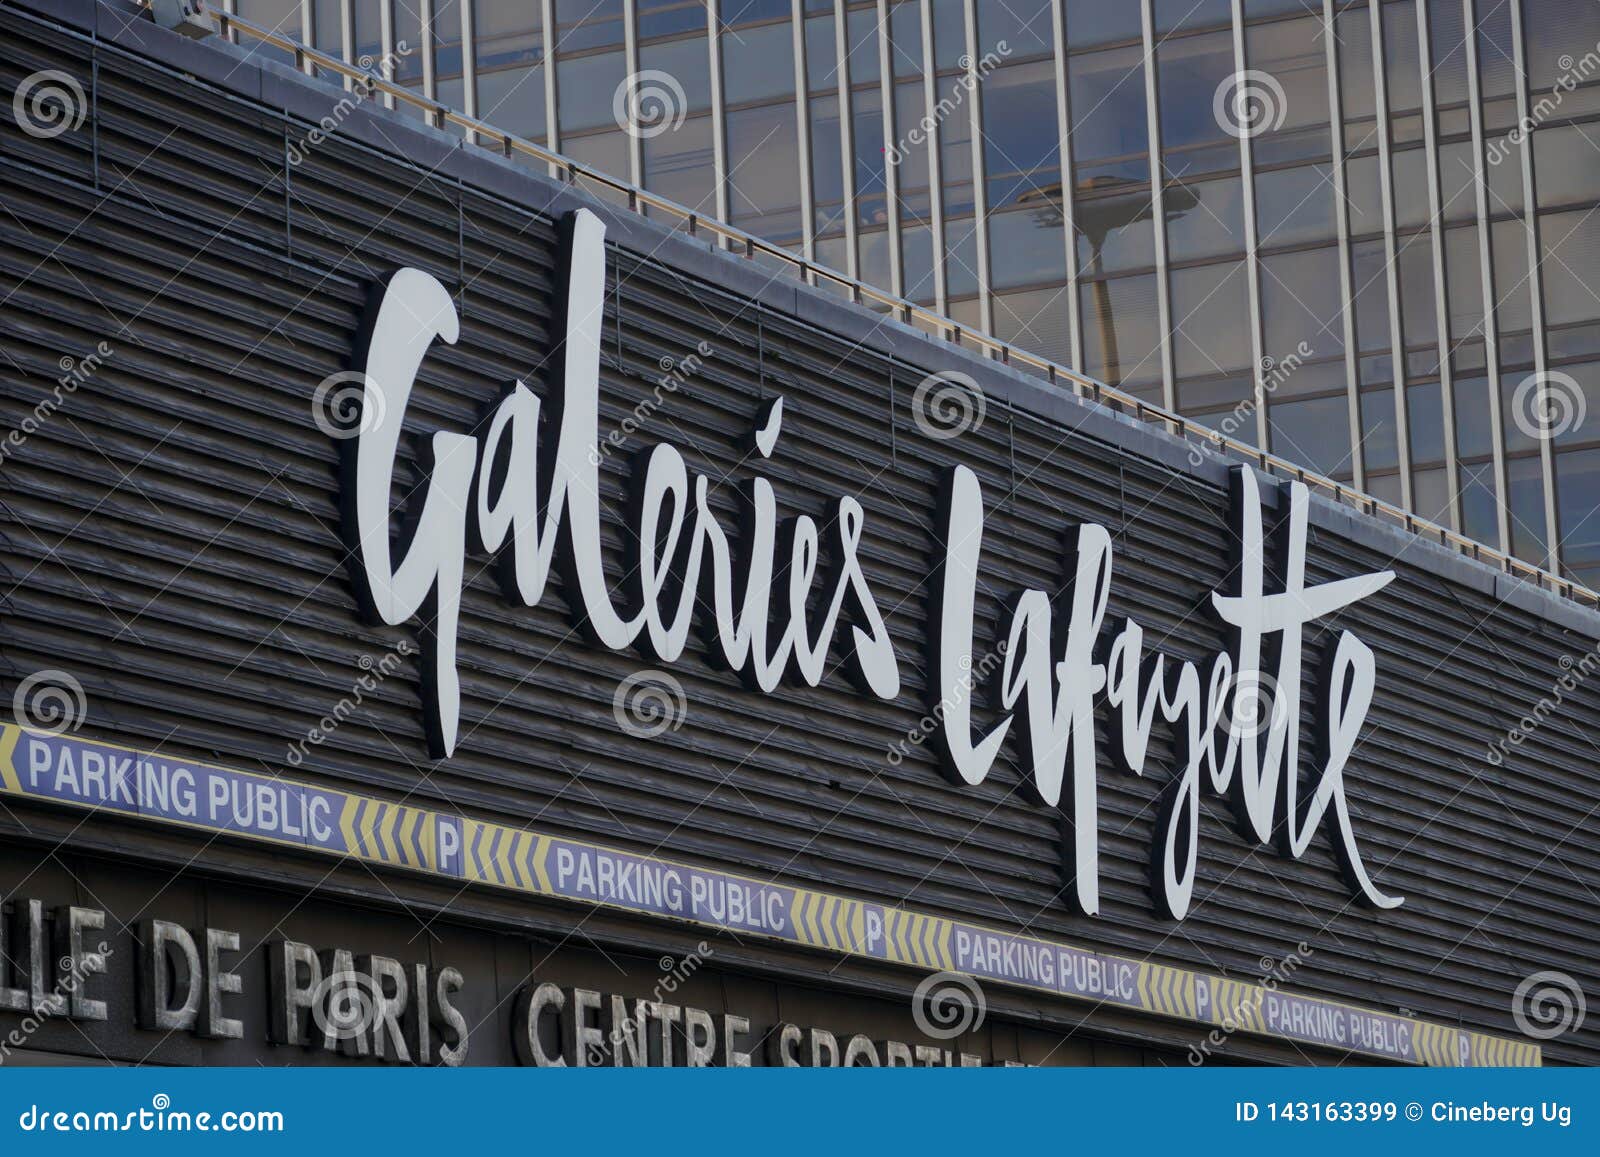 Galeries Lafayette in Paris Editorial Stock Image - Image of centre ...